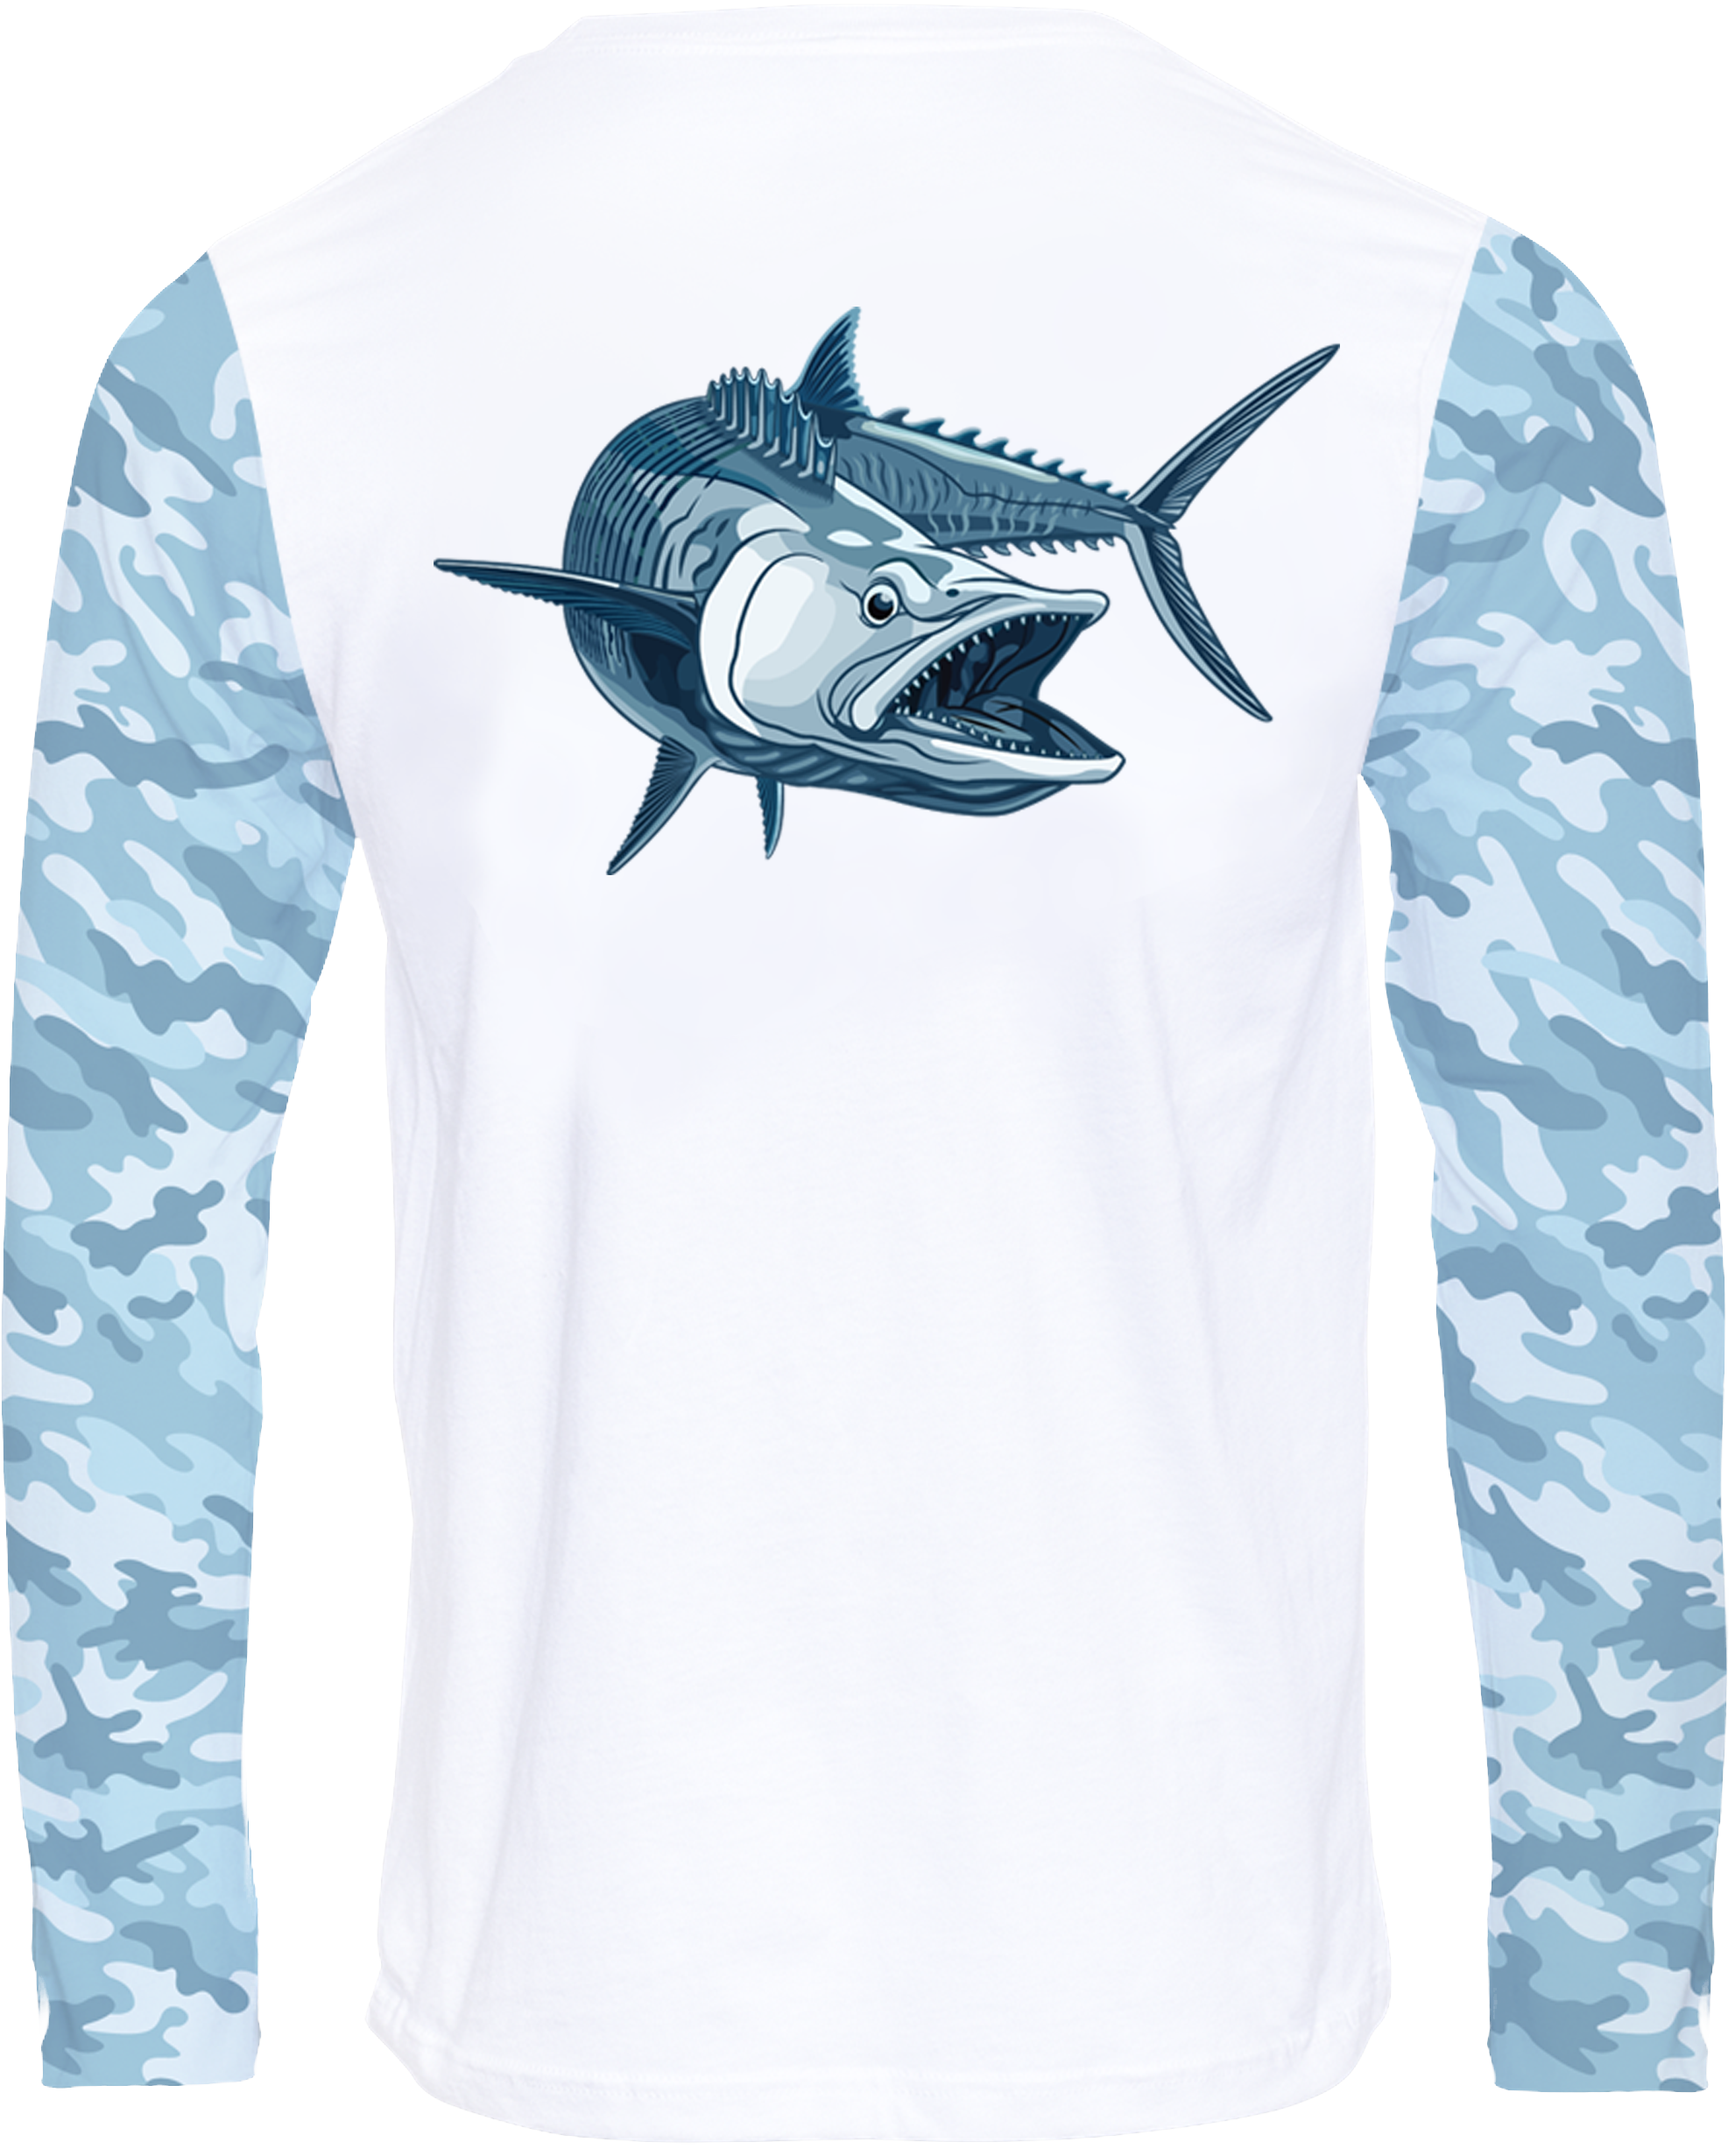 "UV-Protected Long Sleeve Fishing T-Shirt for Sun Safety" kingfish 